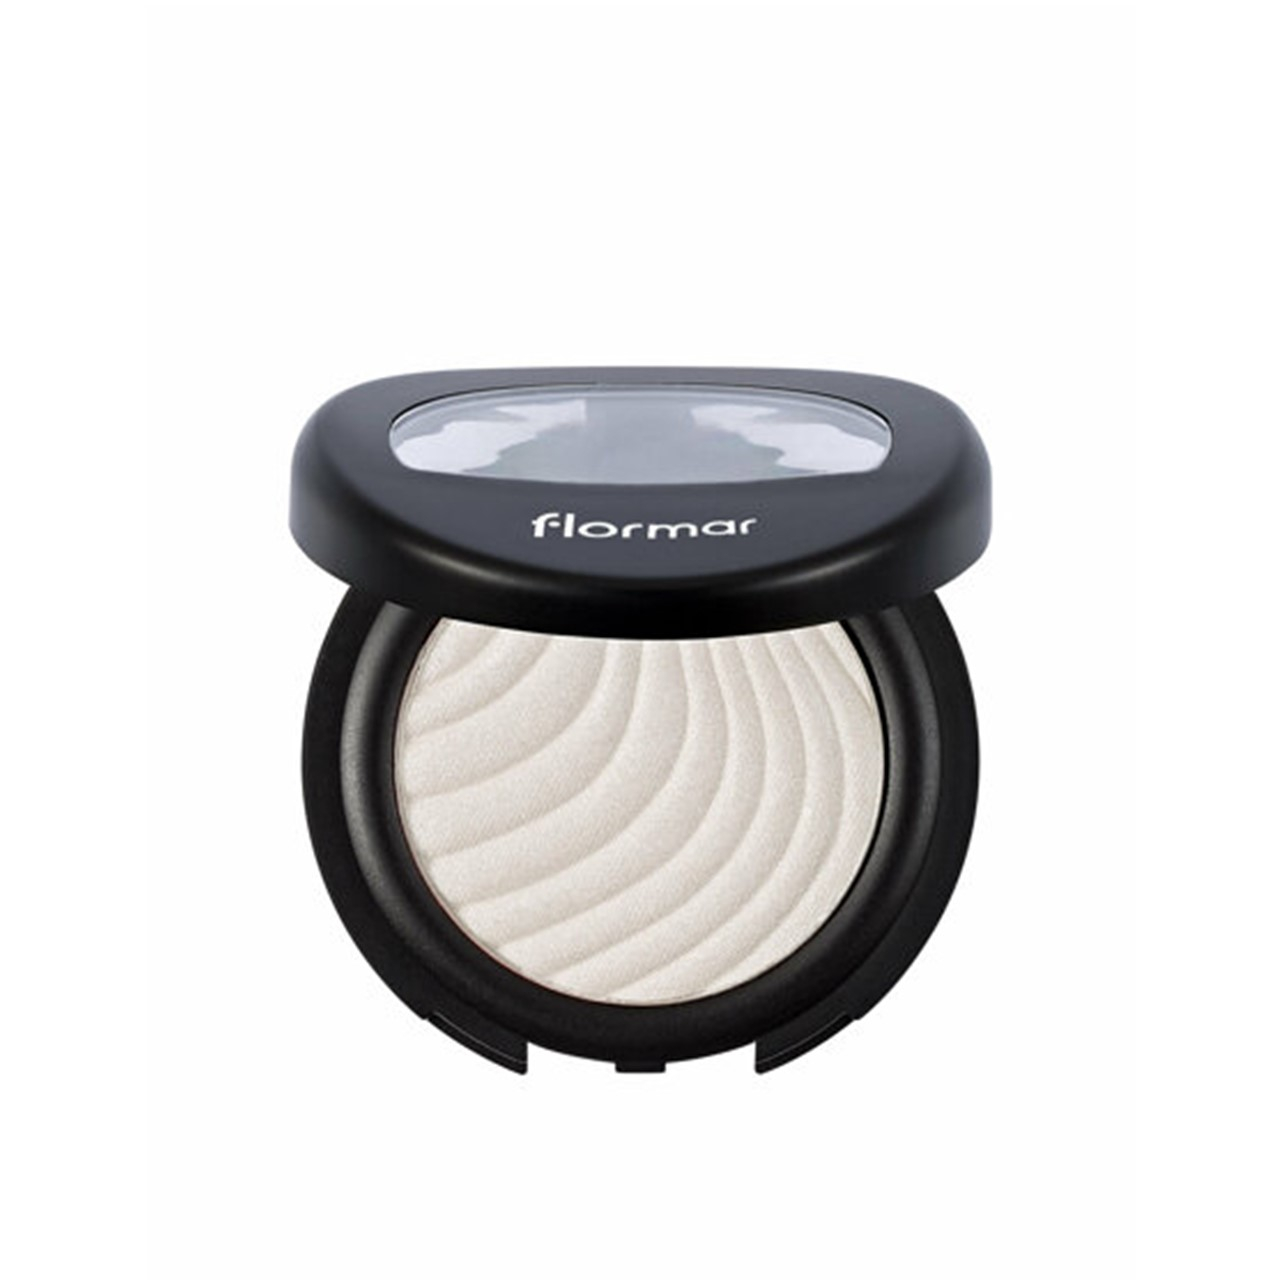 Flormar Mono Eyeshadow 01 Pearly White 4g